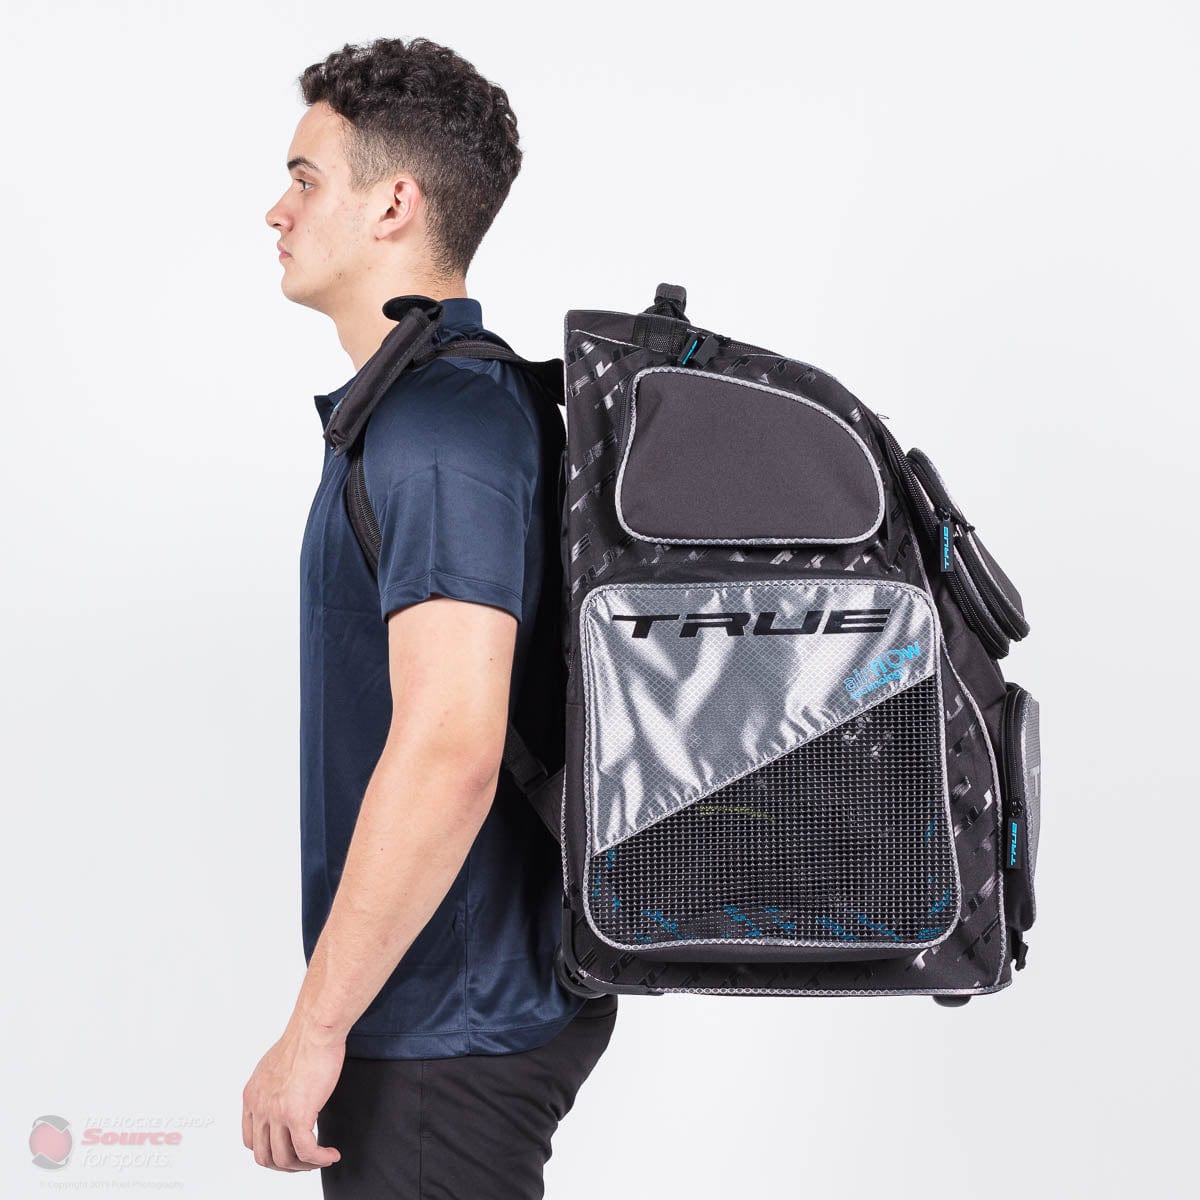 TRUE Backpack Roller Wheel Bag - Hockey Services